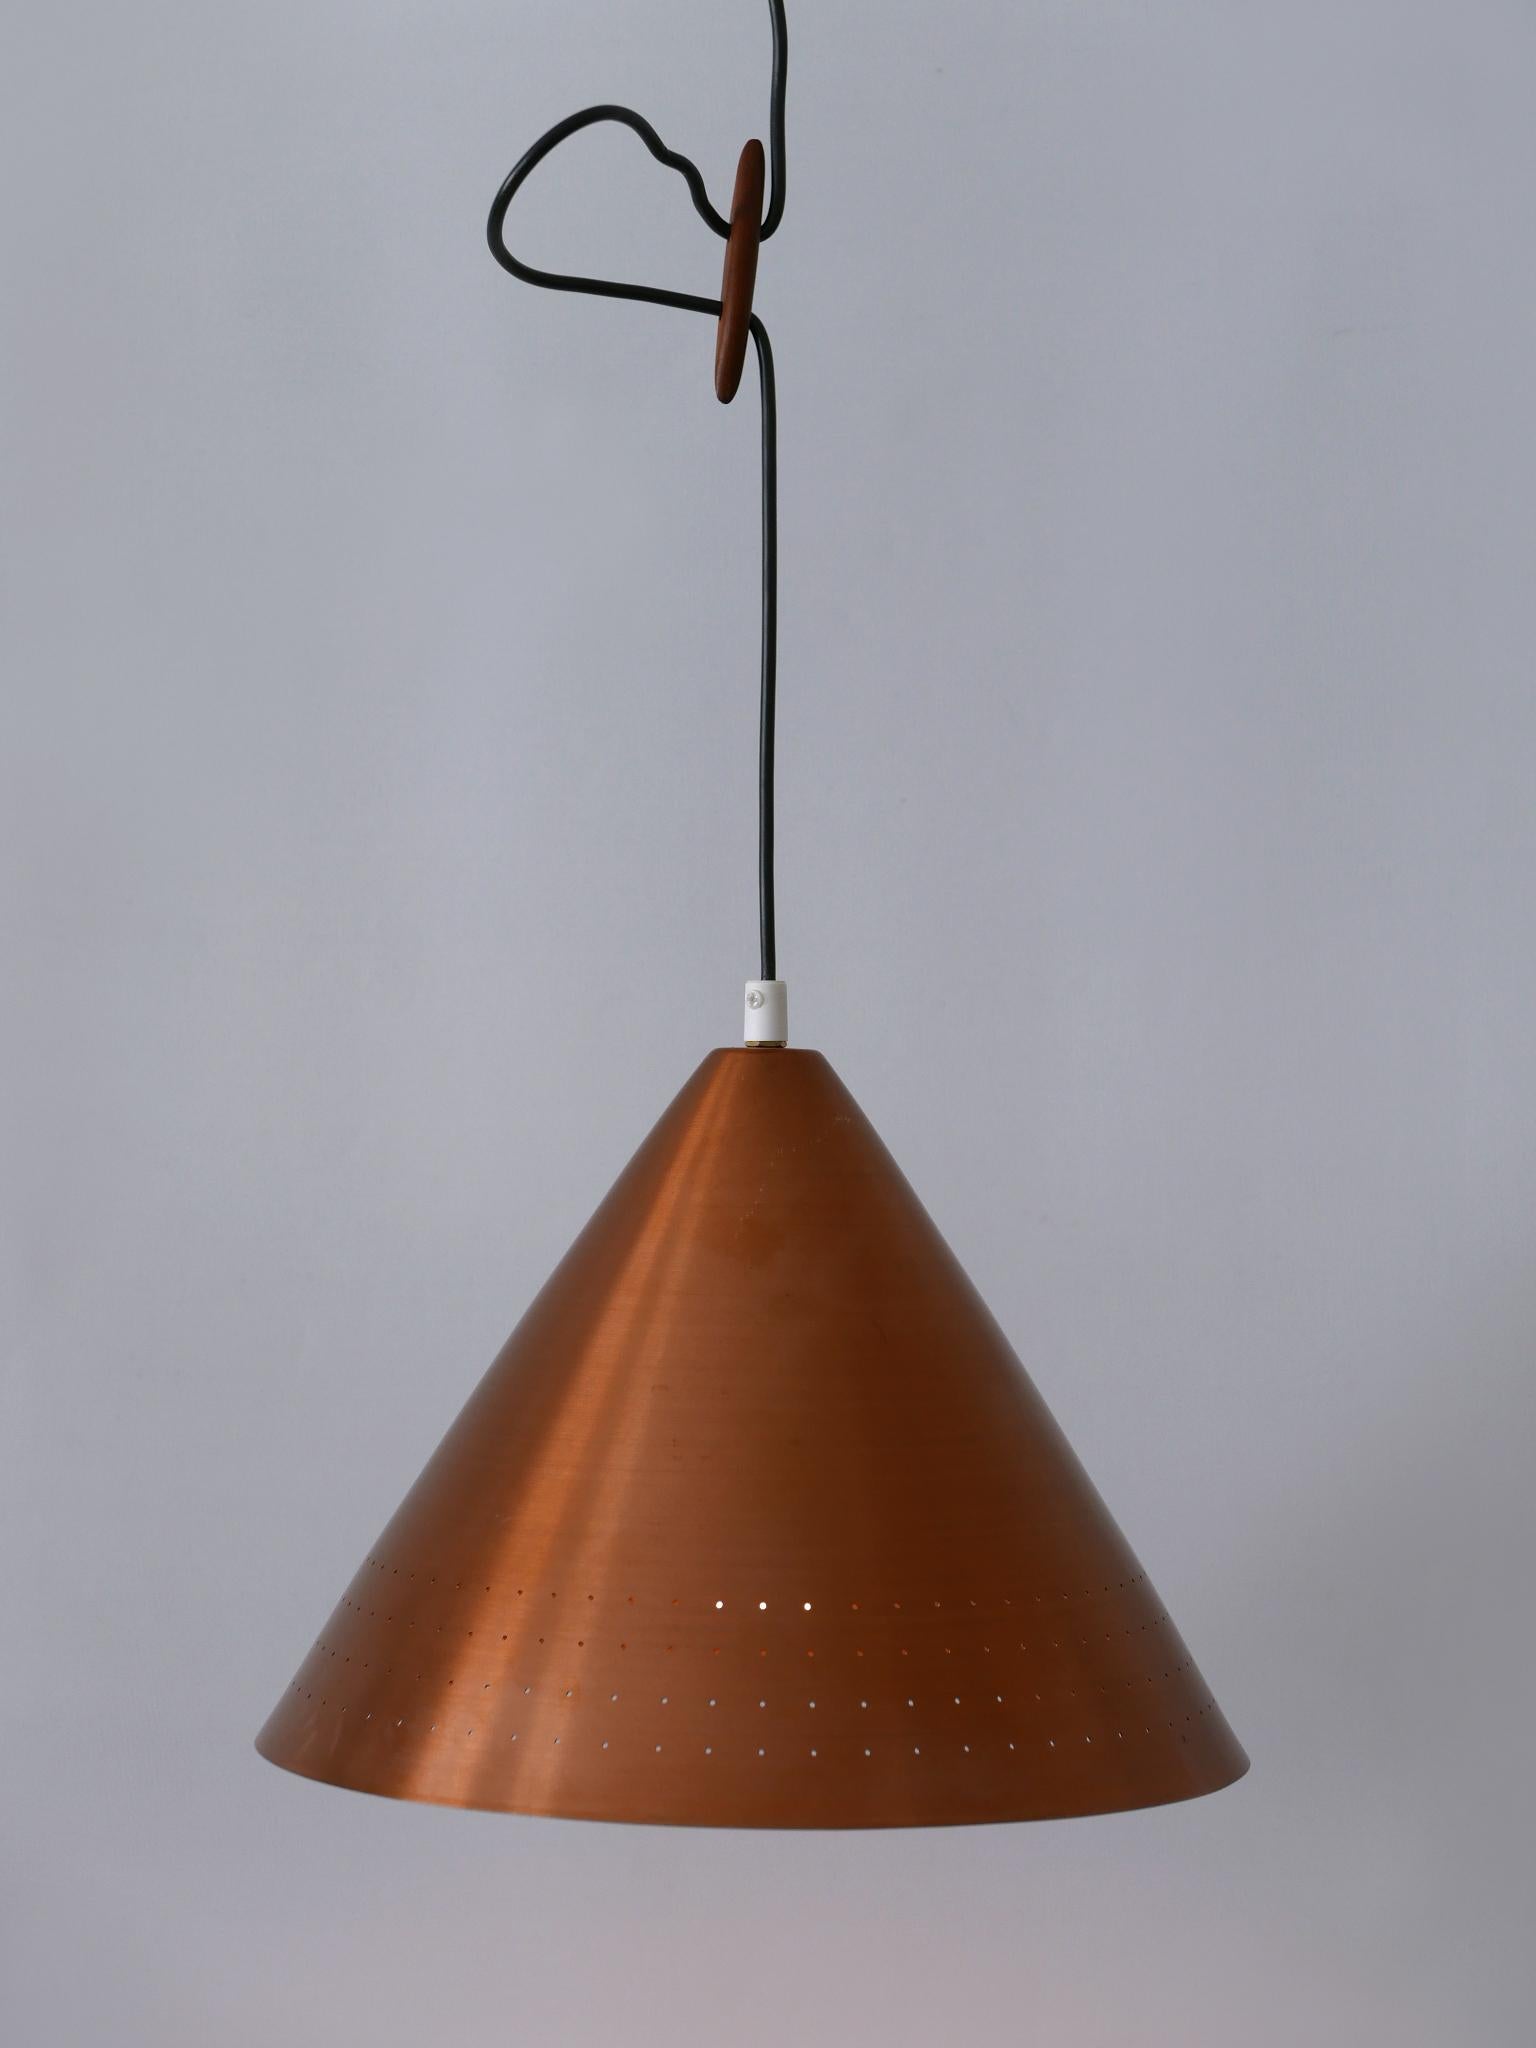 Rare Mid-Century Modern Scandinavian Copper Pendant Lamp or Hanging Light  1960s For Sale 2